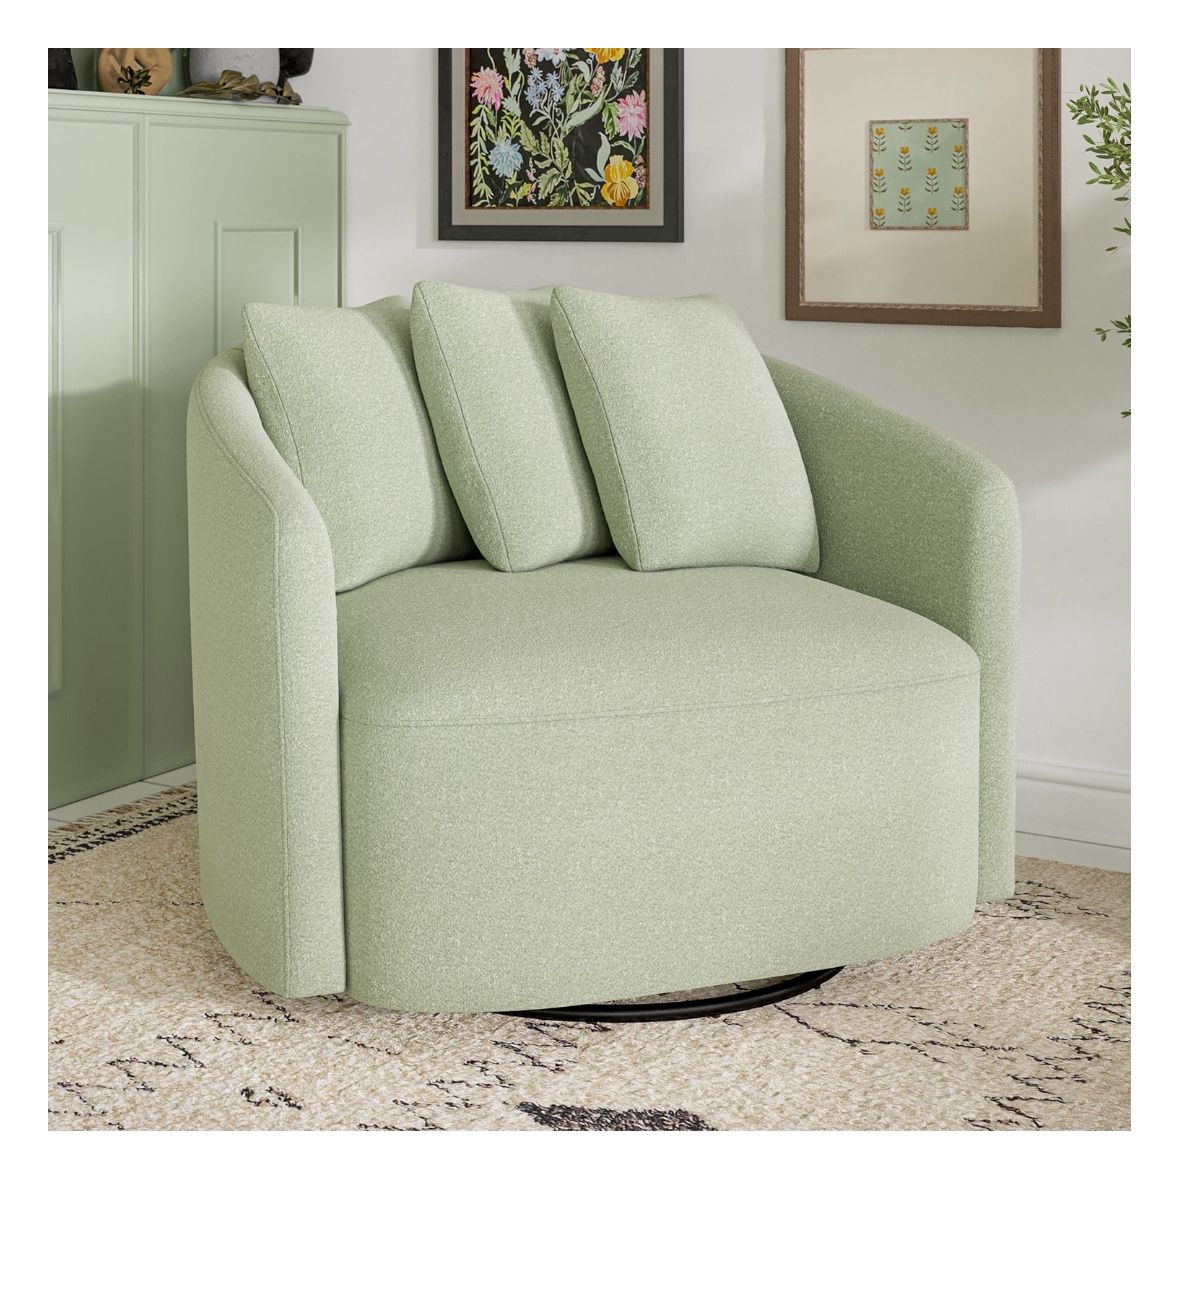 Beautiful Drew Chair by Drew Barrymore, Sage